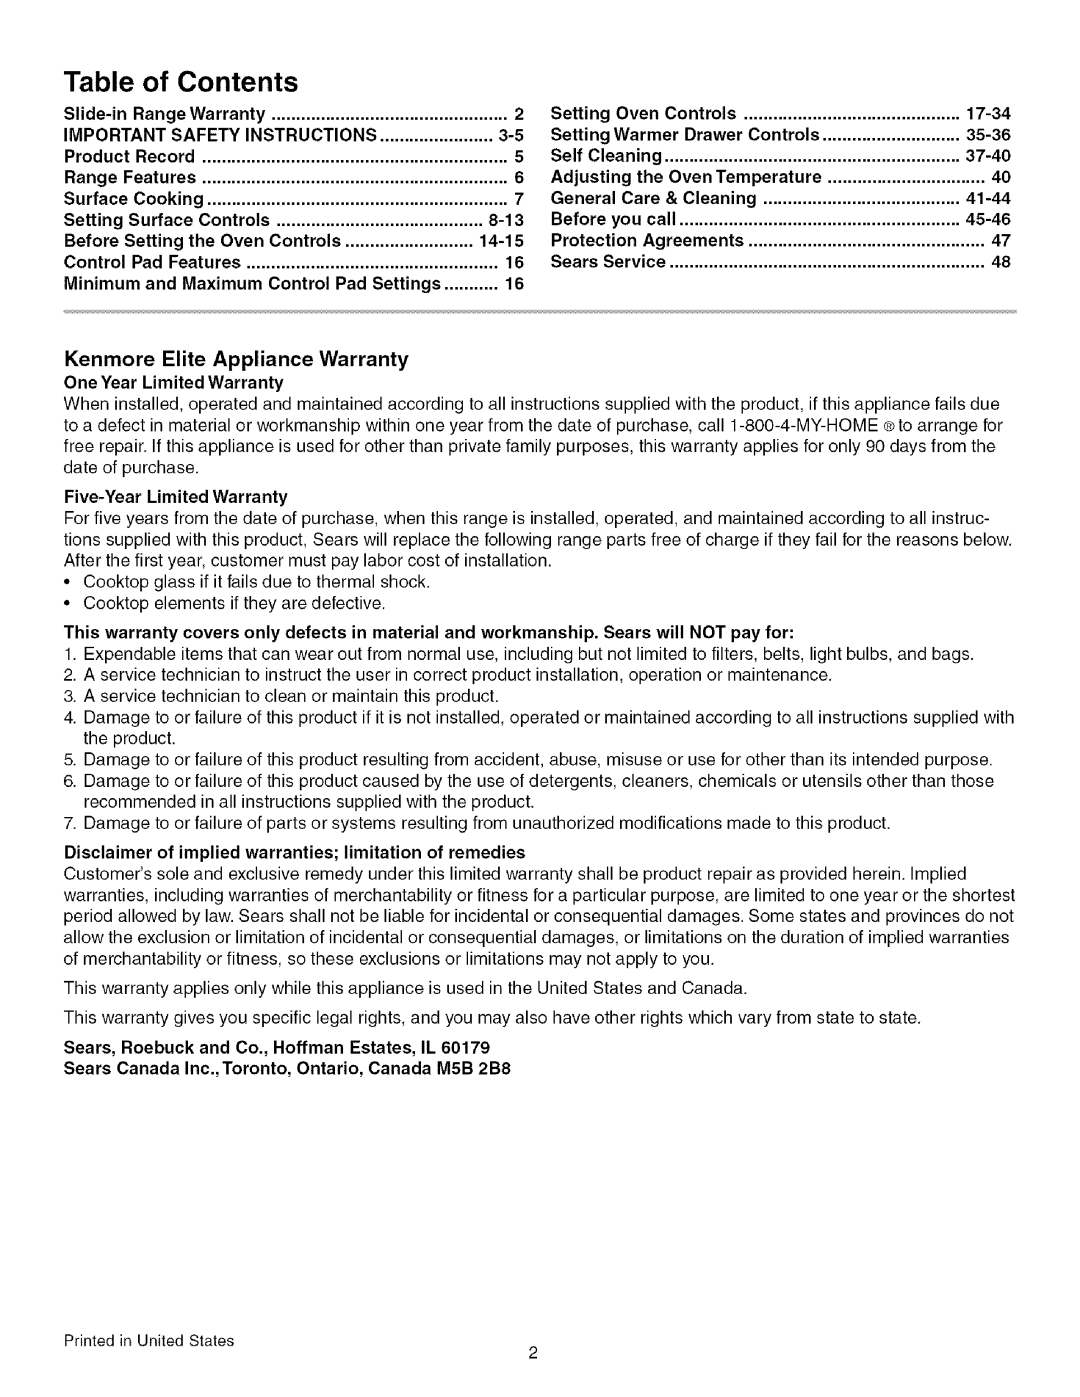 Kenmore 790.4672 of Contents, Table, Kenmore Elite Appliance Warranty, Slide-inRange Warranty, Setting, Oven Controls 